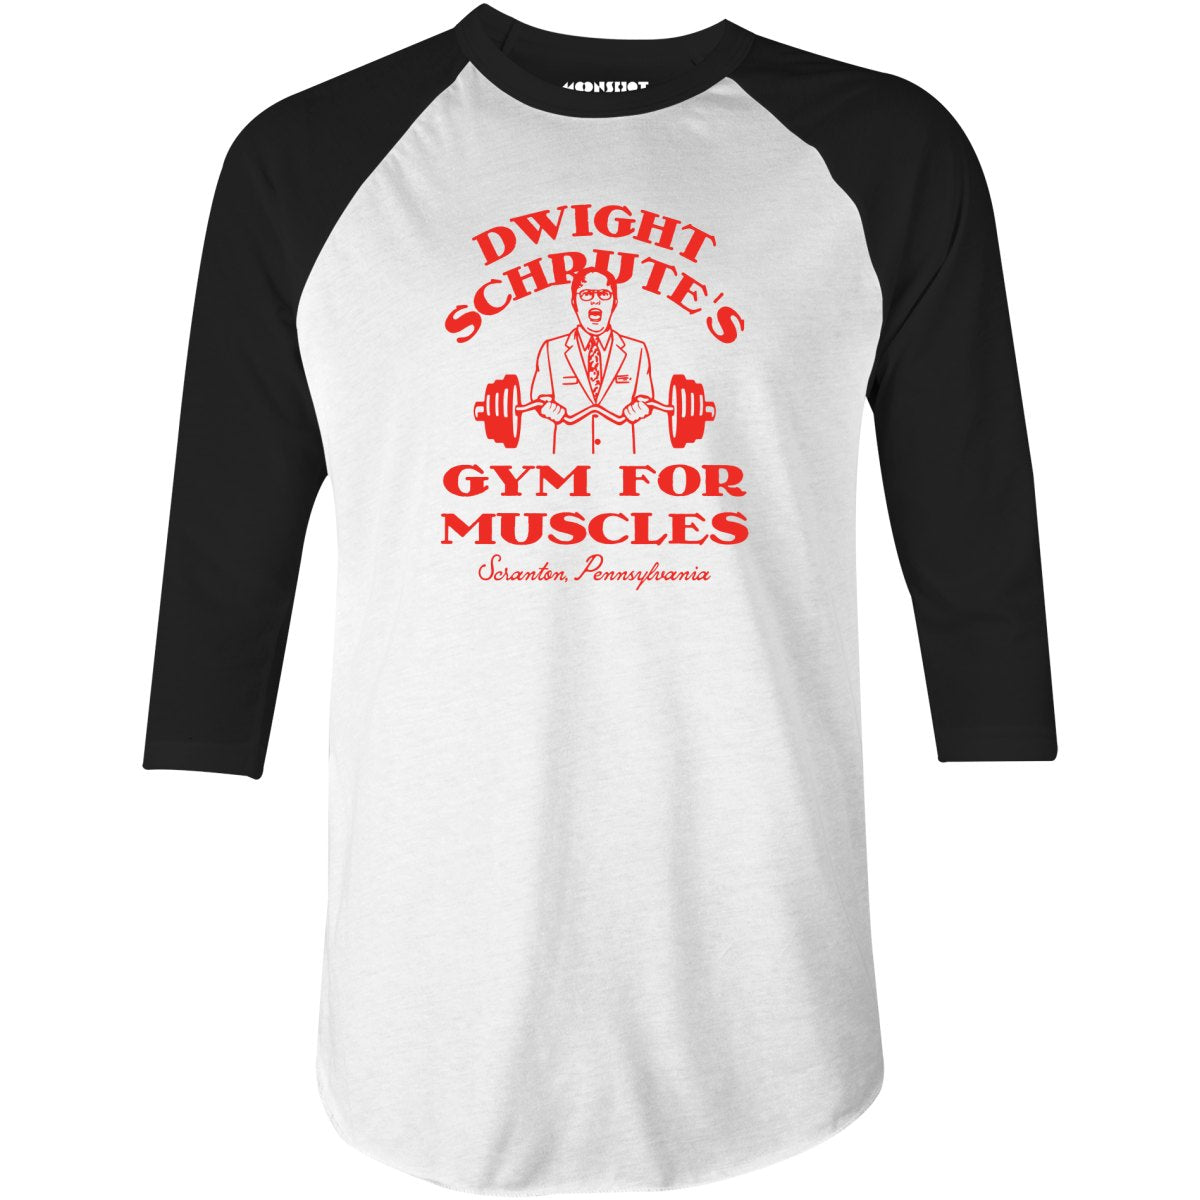 Dwight Schrute's Gym For Muscles - 3/4 Sleeve Raglan T-Shirt